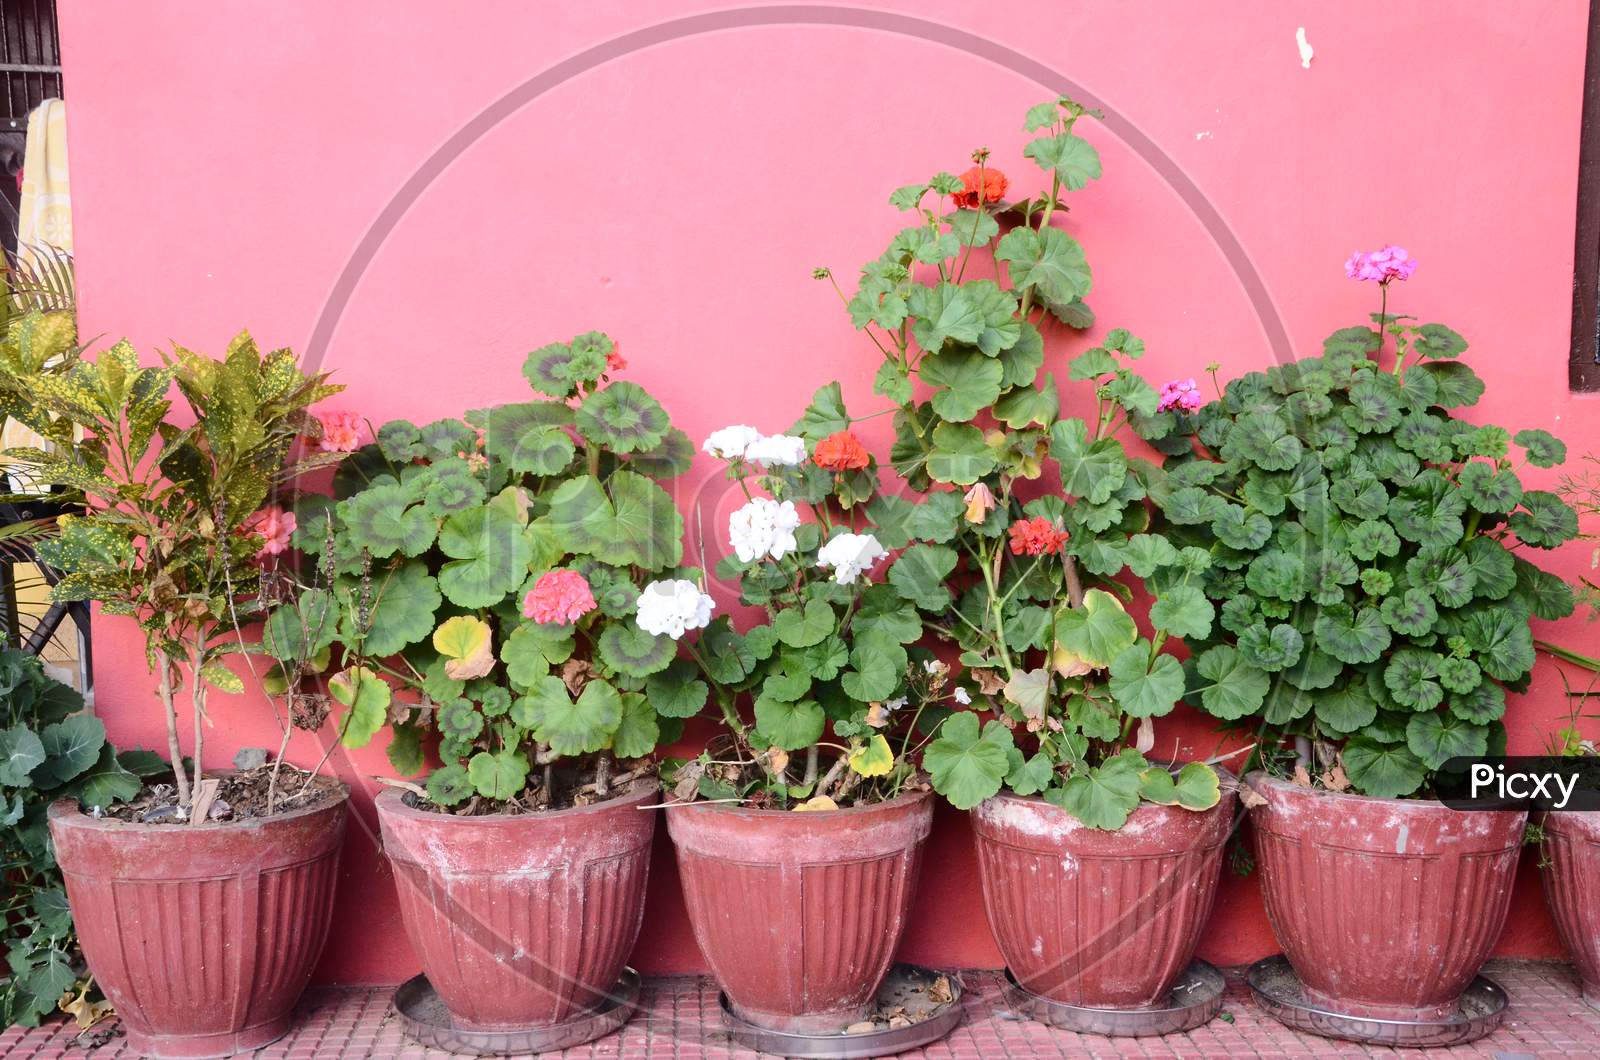 Flowering Plants Growing in pots In a House